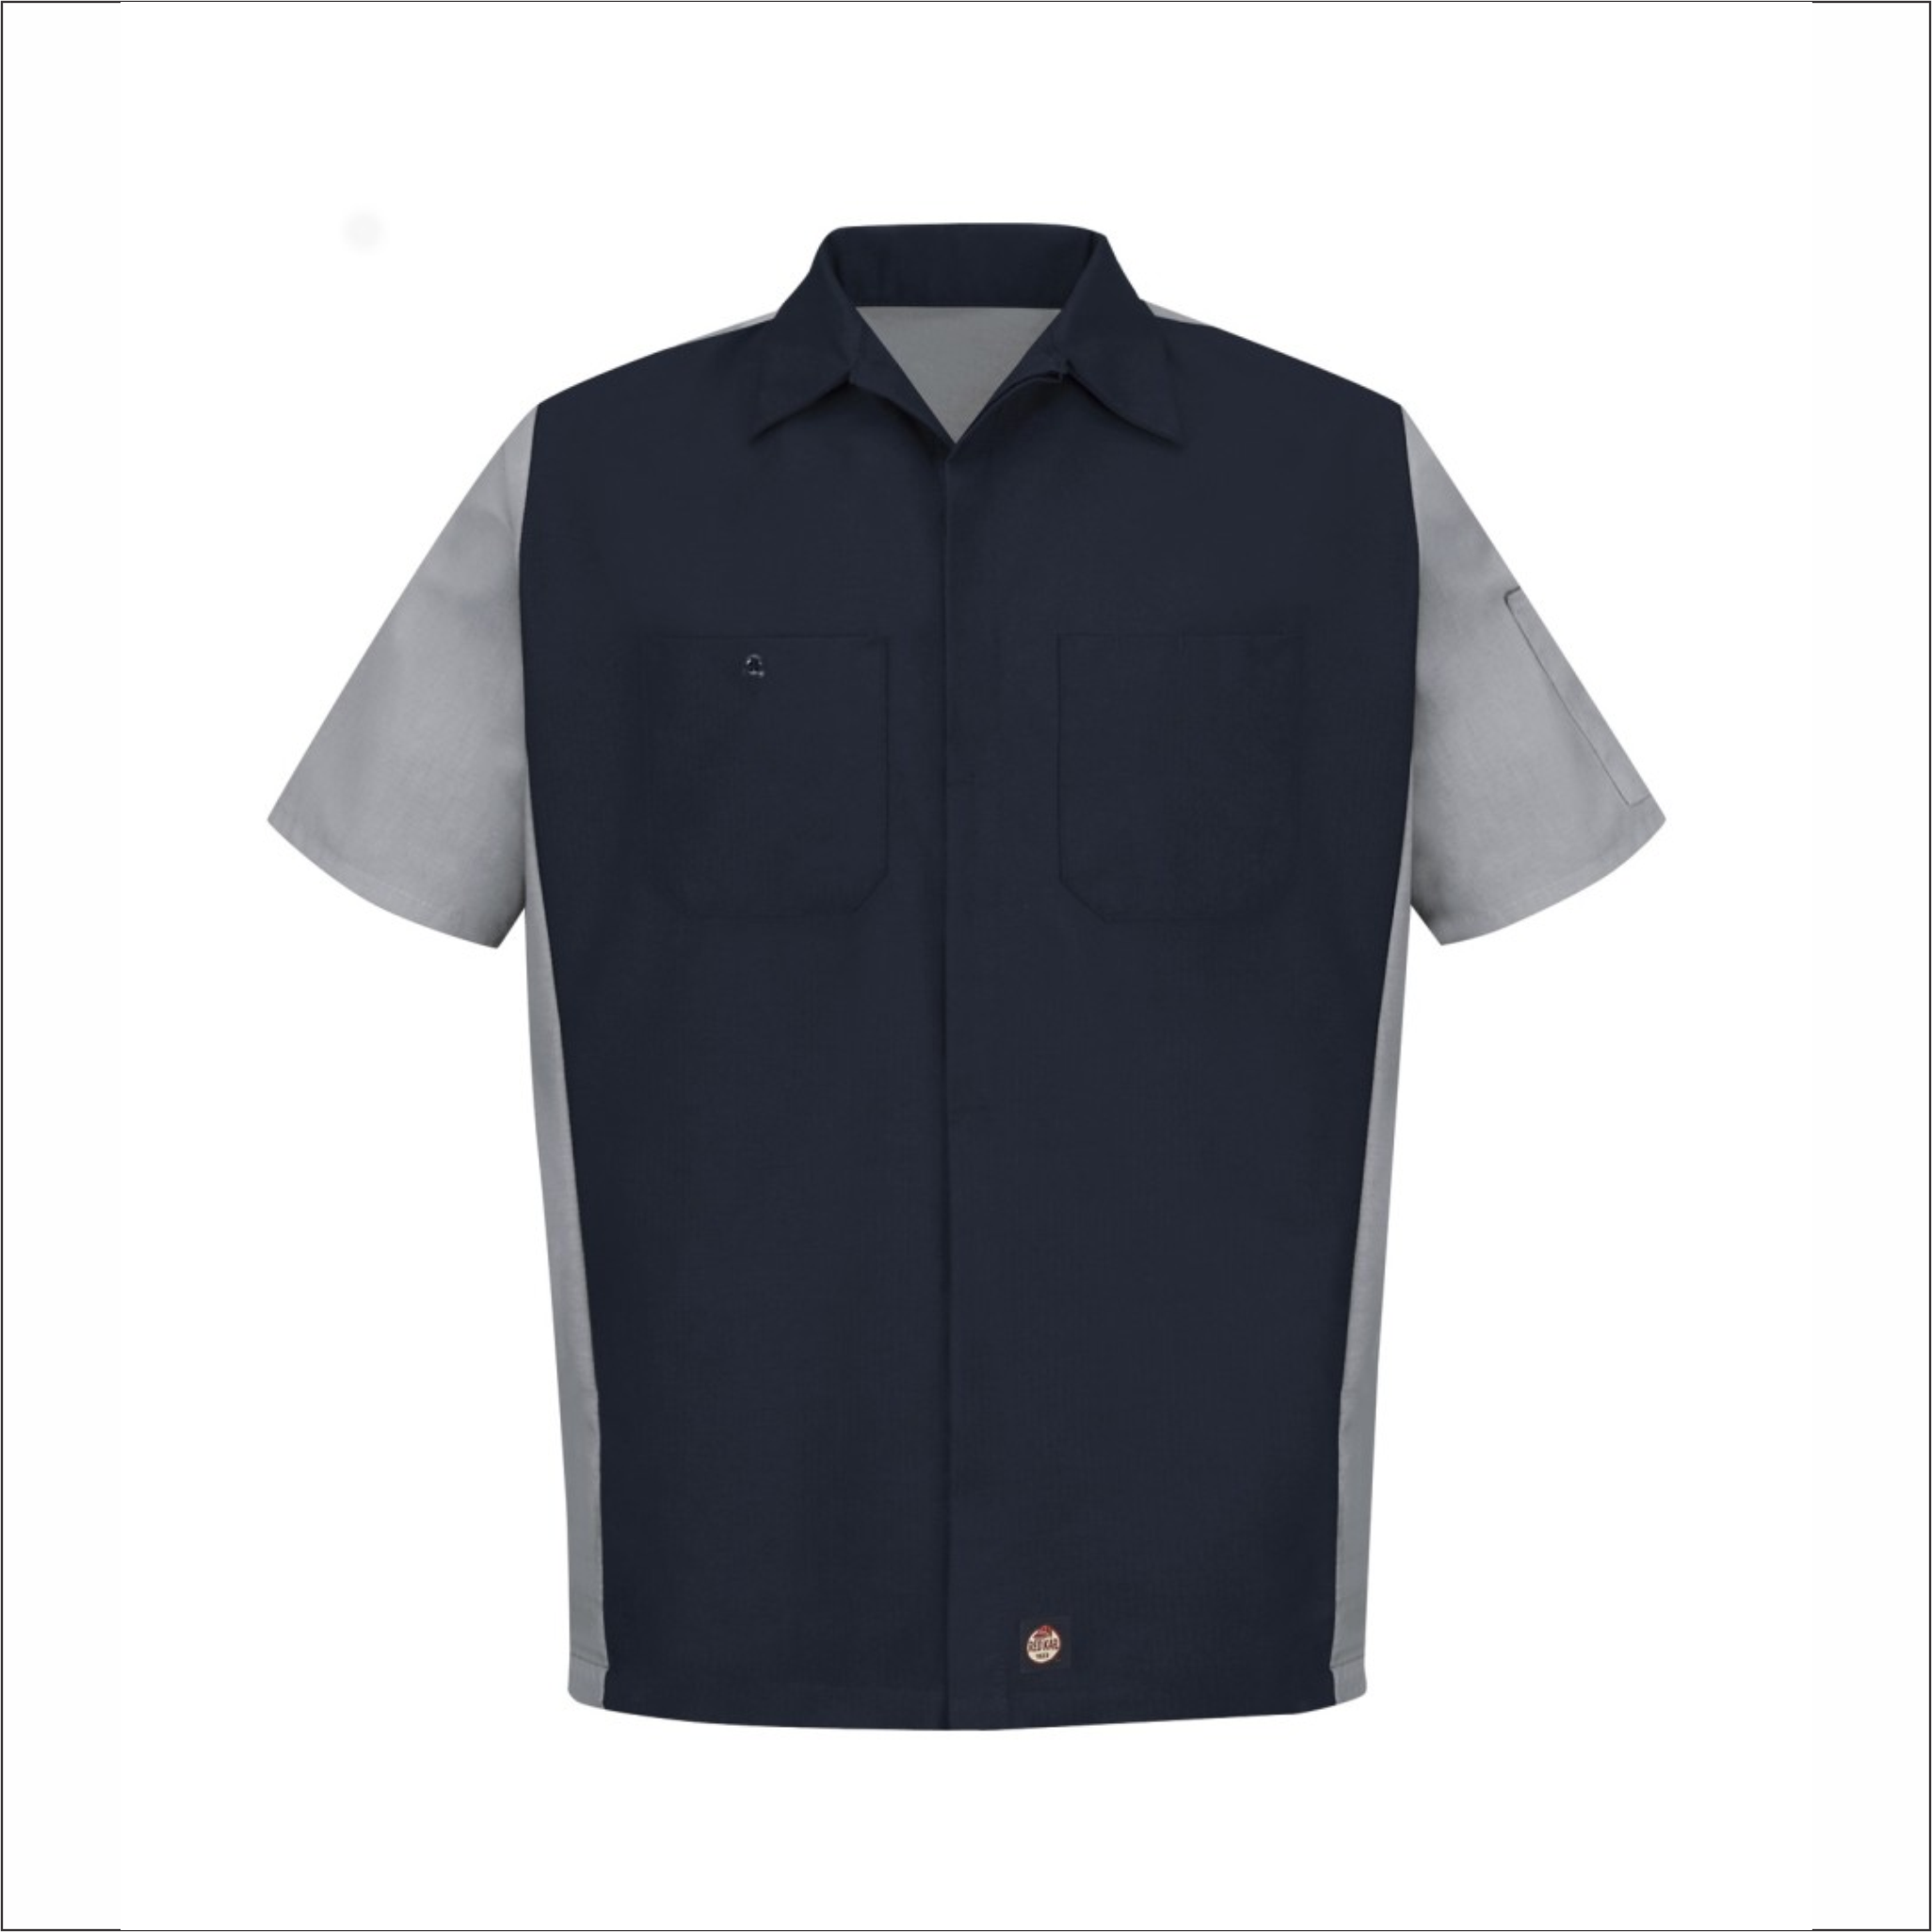 Adult Navy Grey Dress Shirt - Short Sleeve - SY20